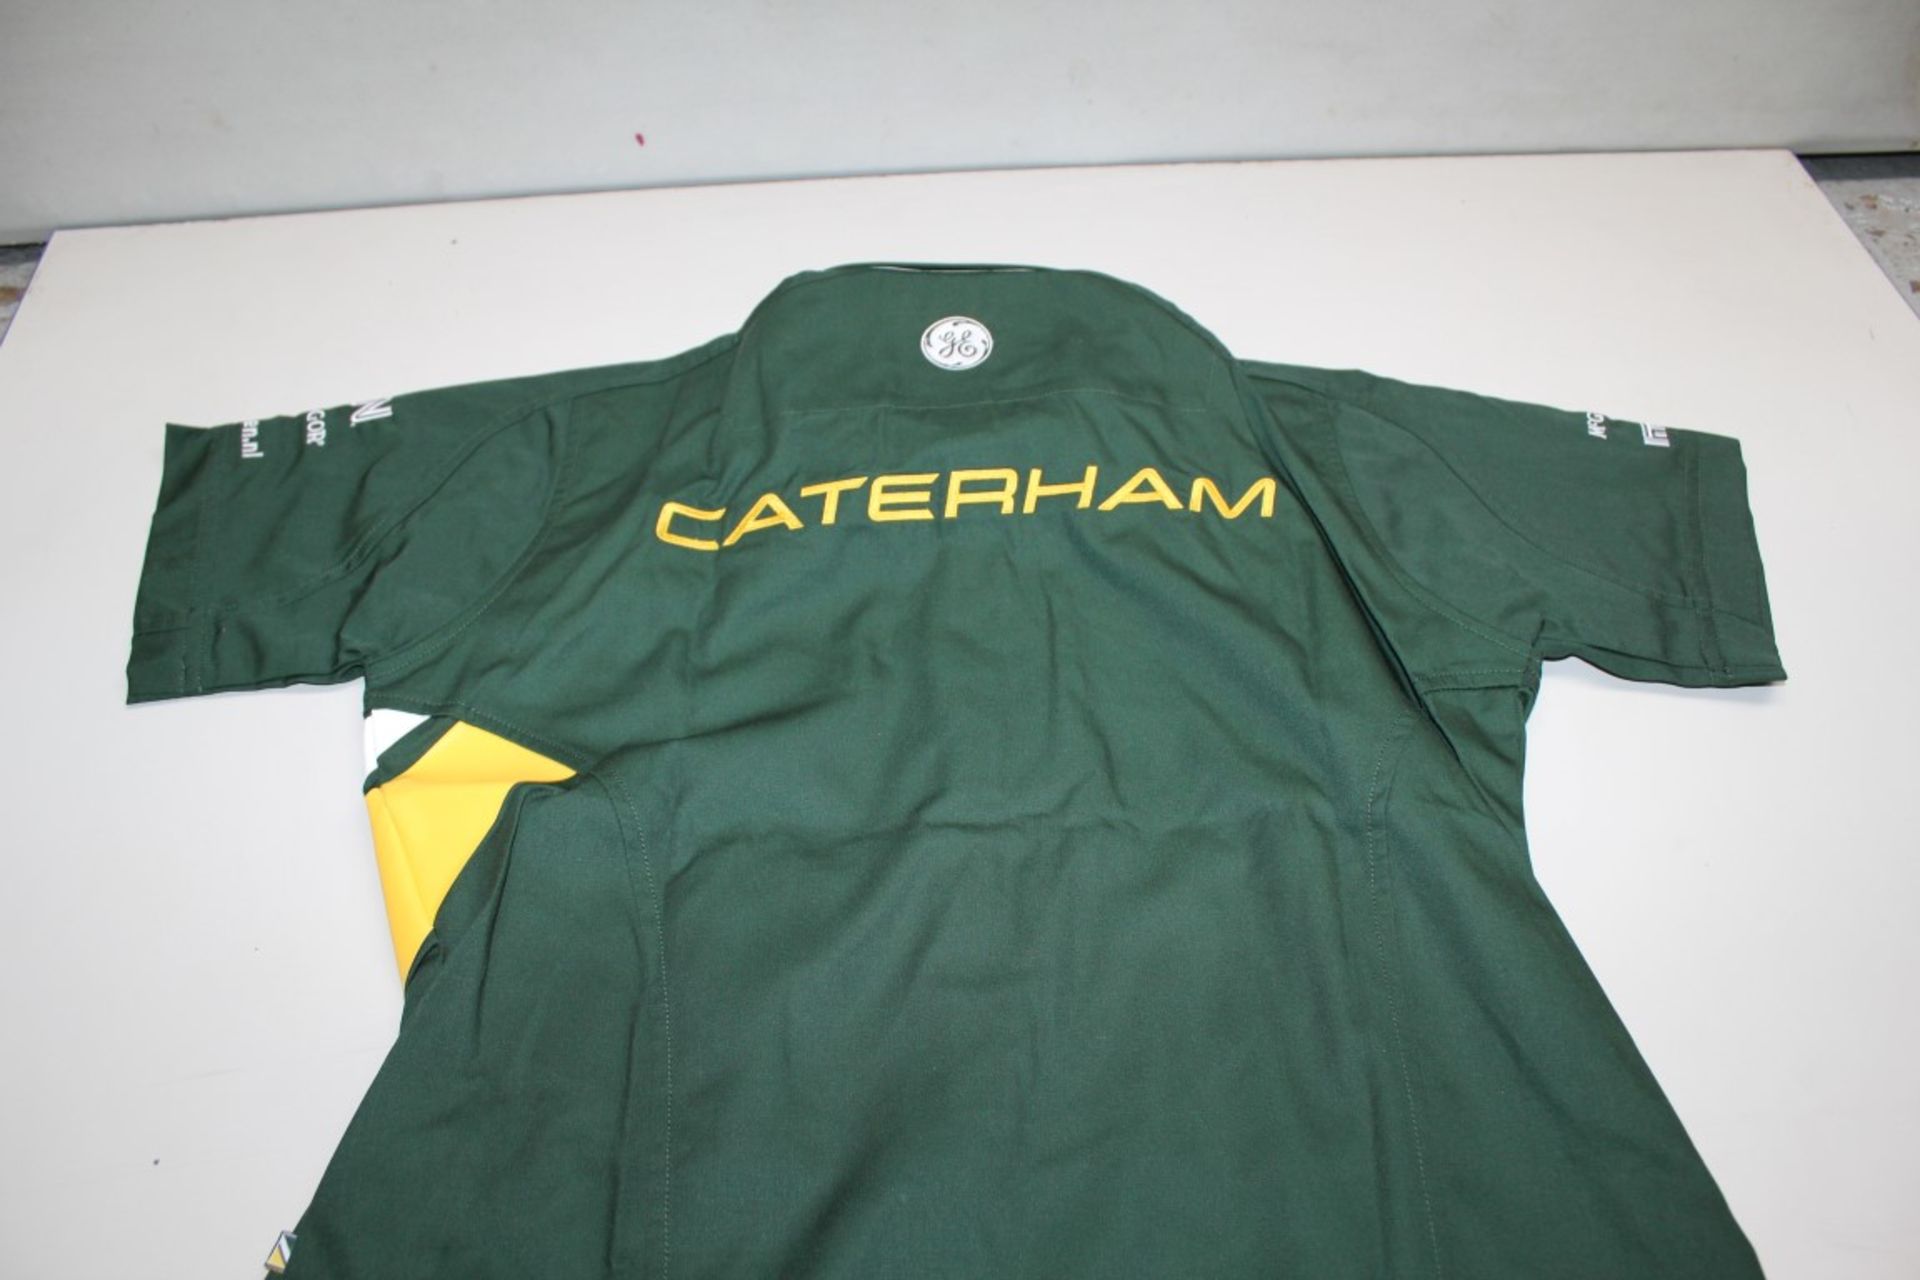 10 x CATERHAM F1 Team Engineer Race Shirts - Short Sleeved - Size: X-Large - Ref: JIM040B - - Image 3 of 3